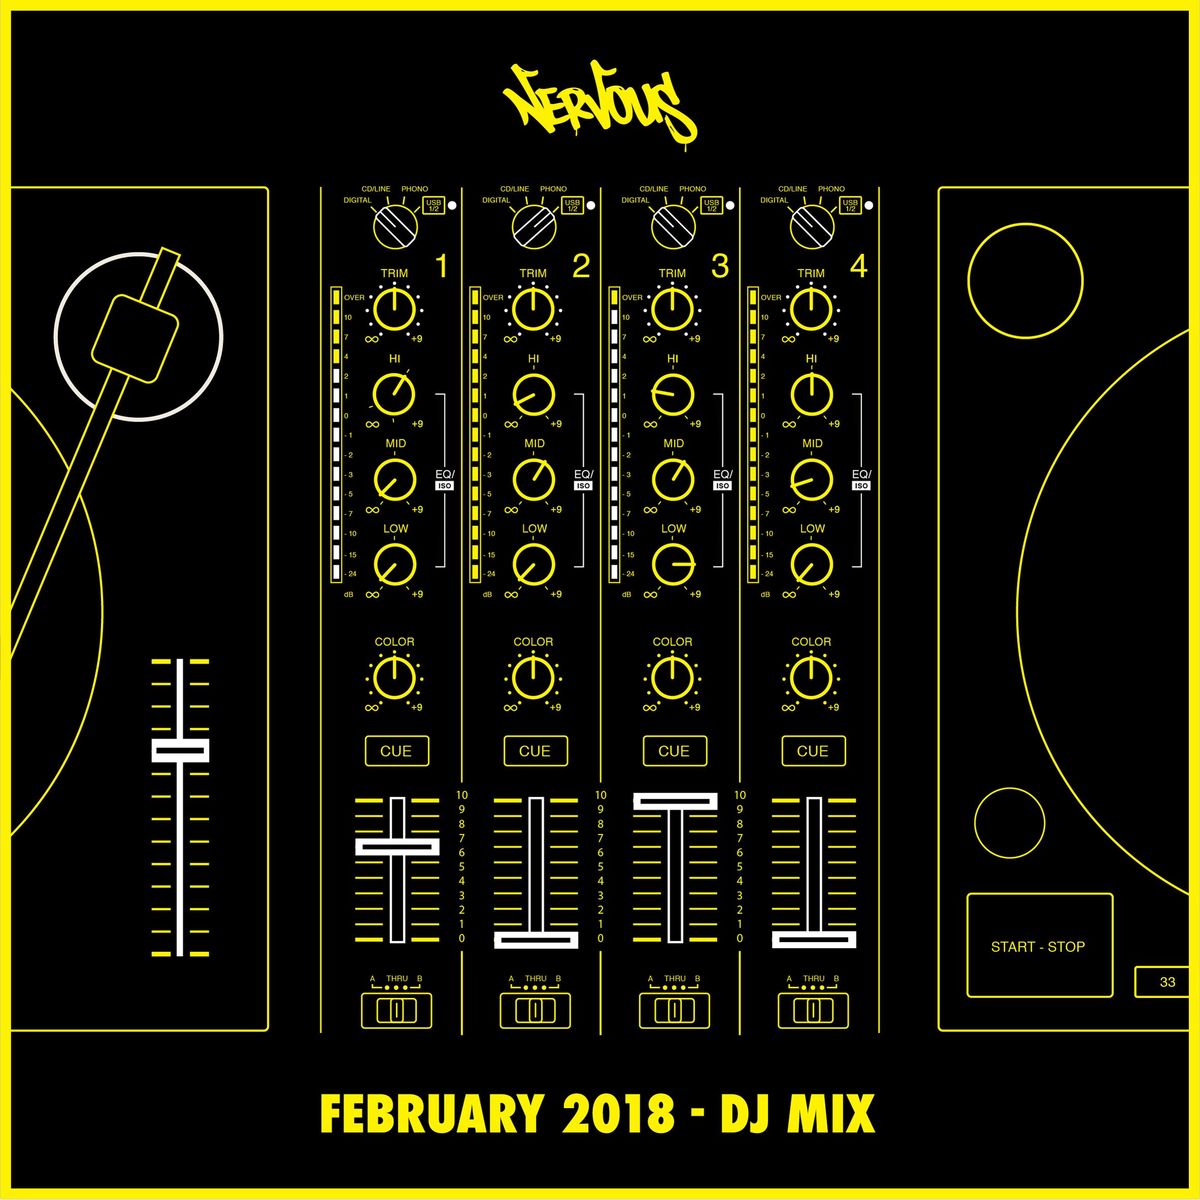 VA - Nervous February 2018 - DJ Mix / Nervous